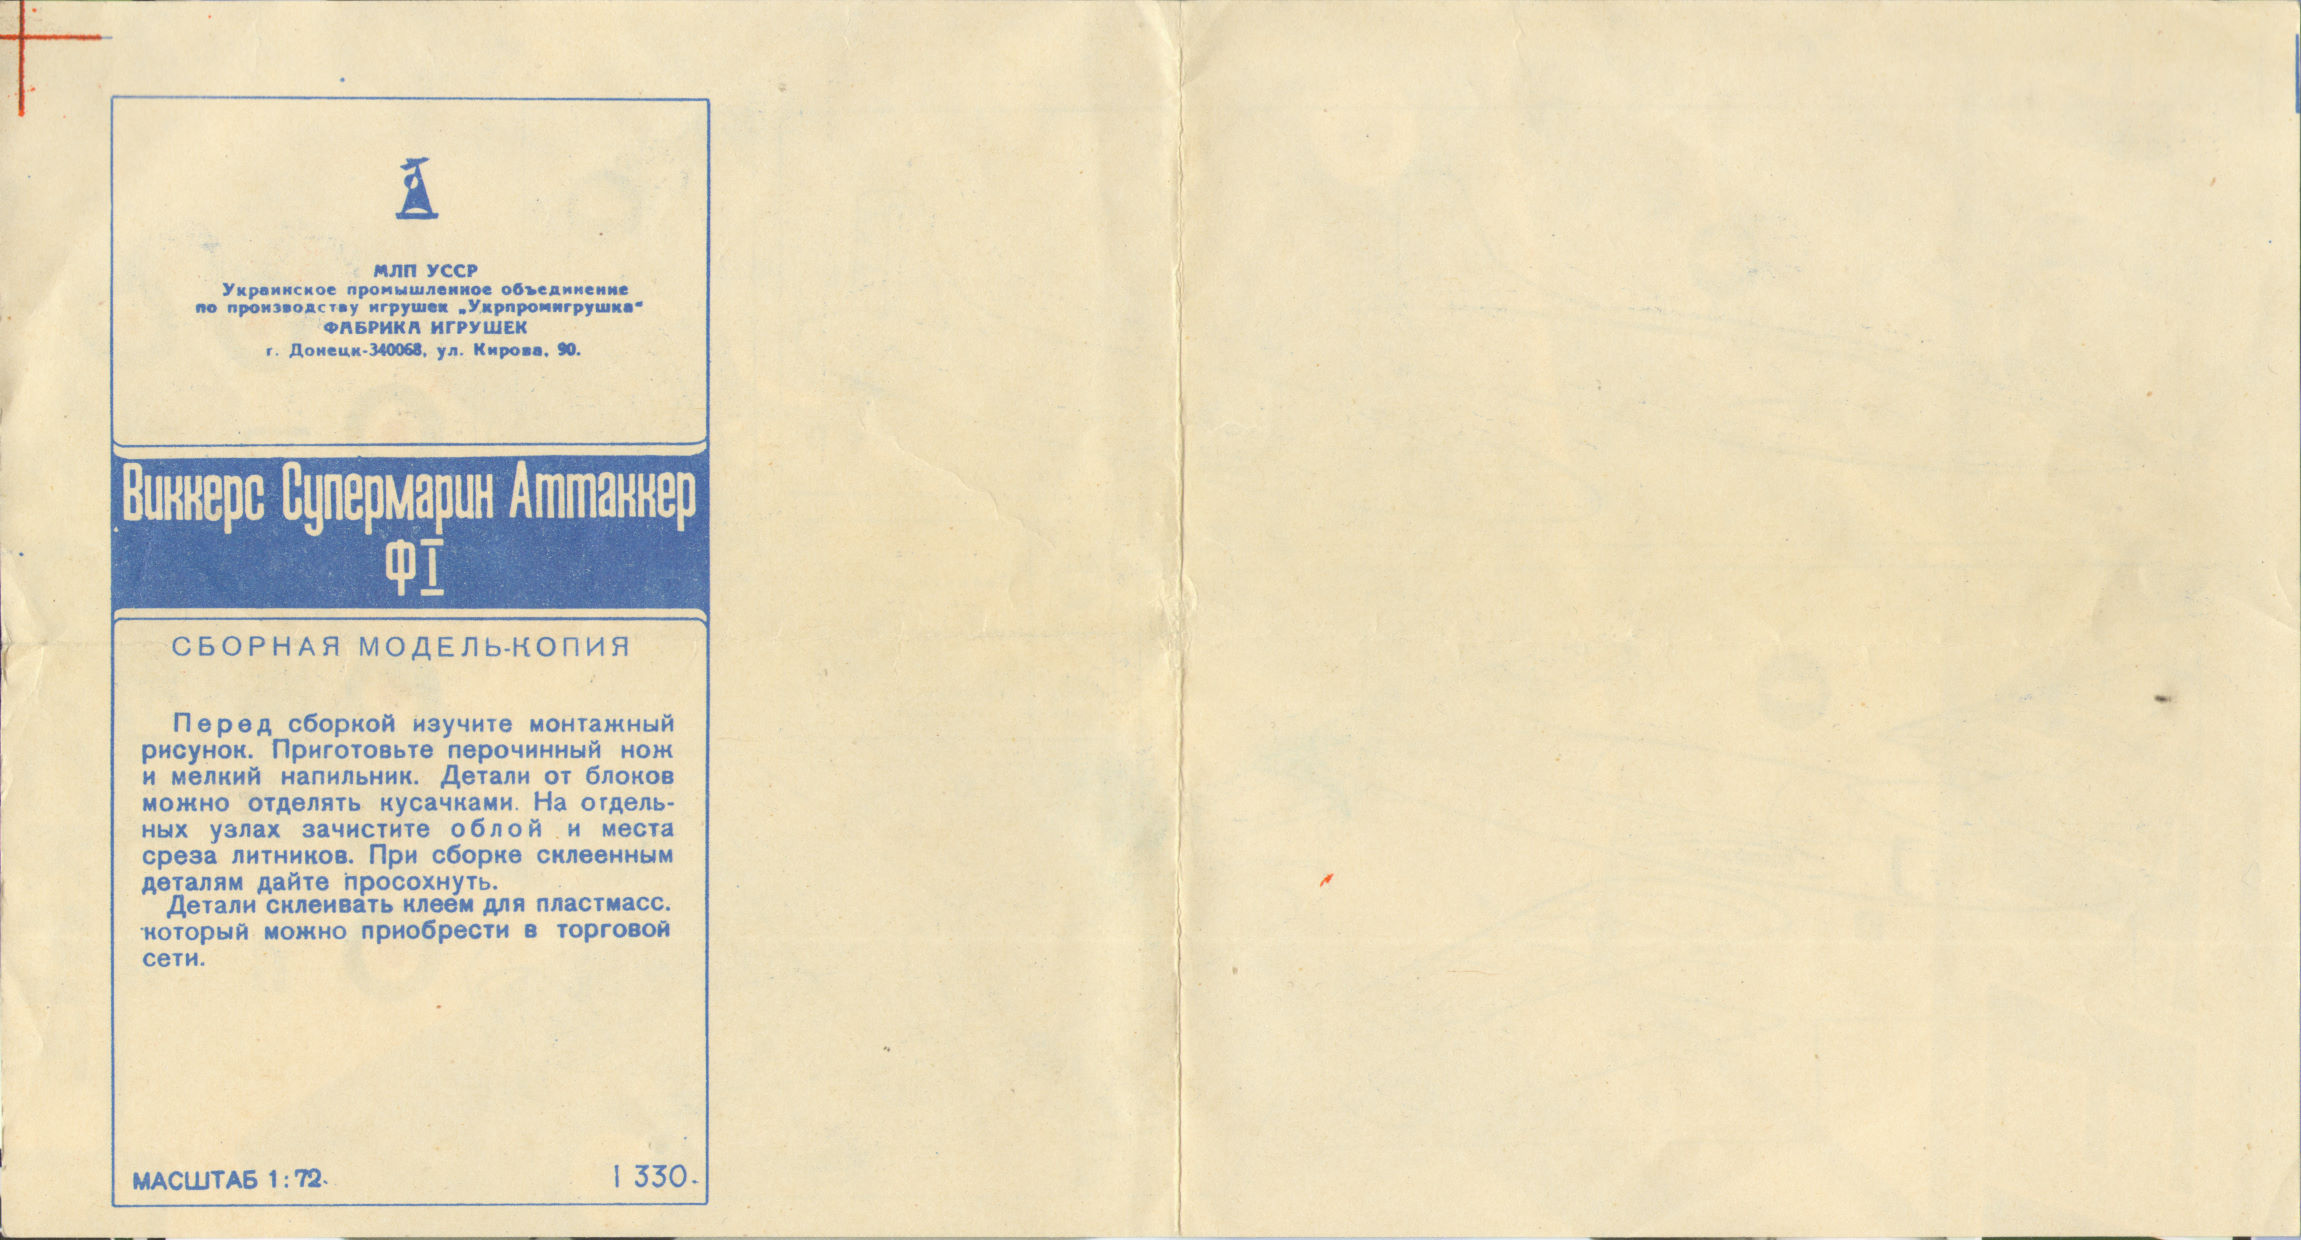 Инструкция по сборке Виккерс-Супермарин Аттаккер Ф1, У-085-3542, ДФИ, 1980-е